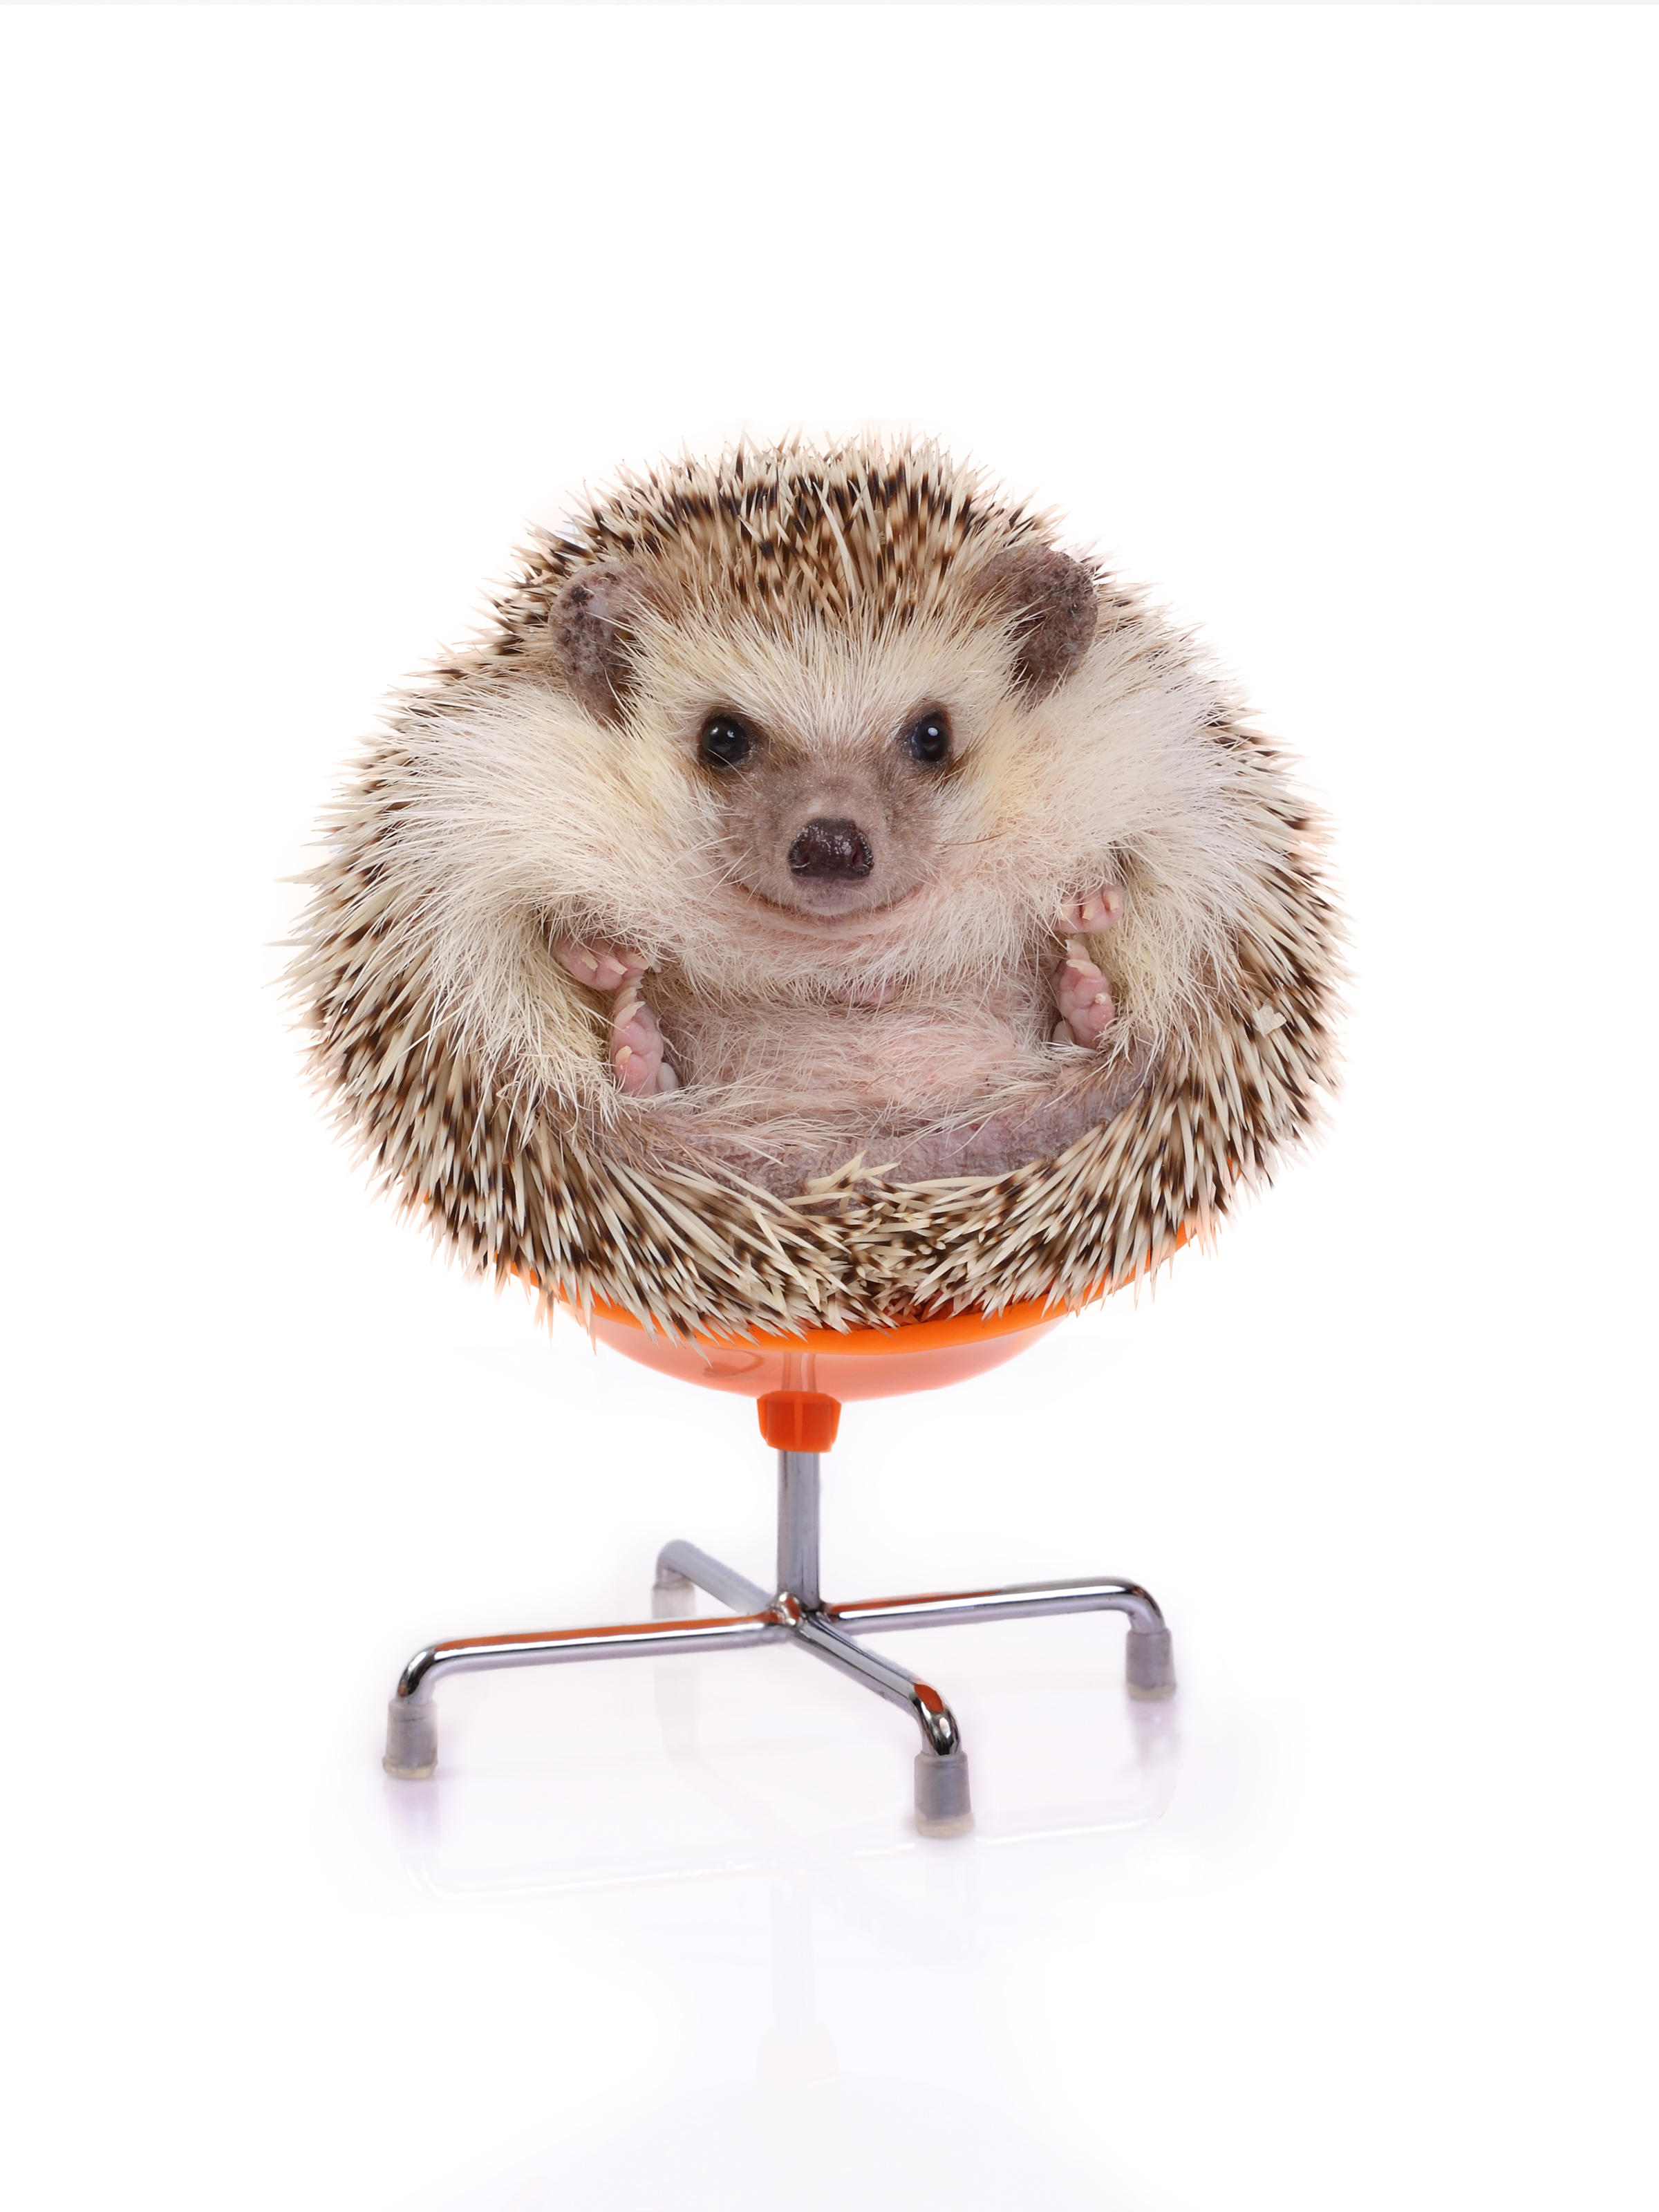 A cute hedgehog on a chair